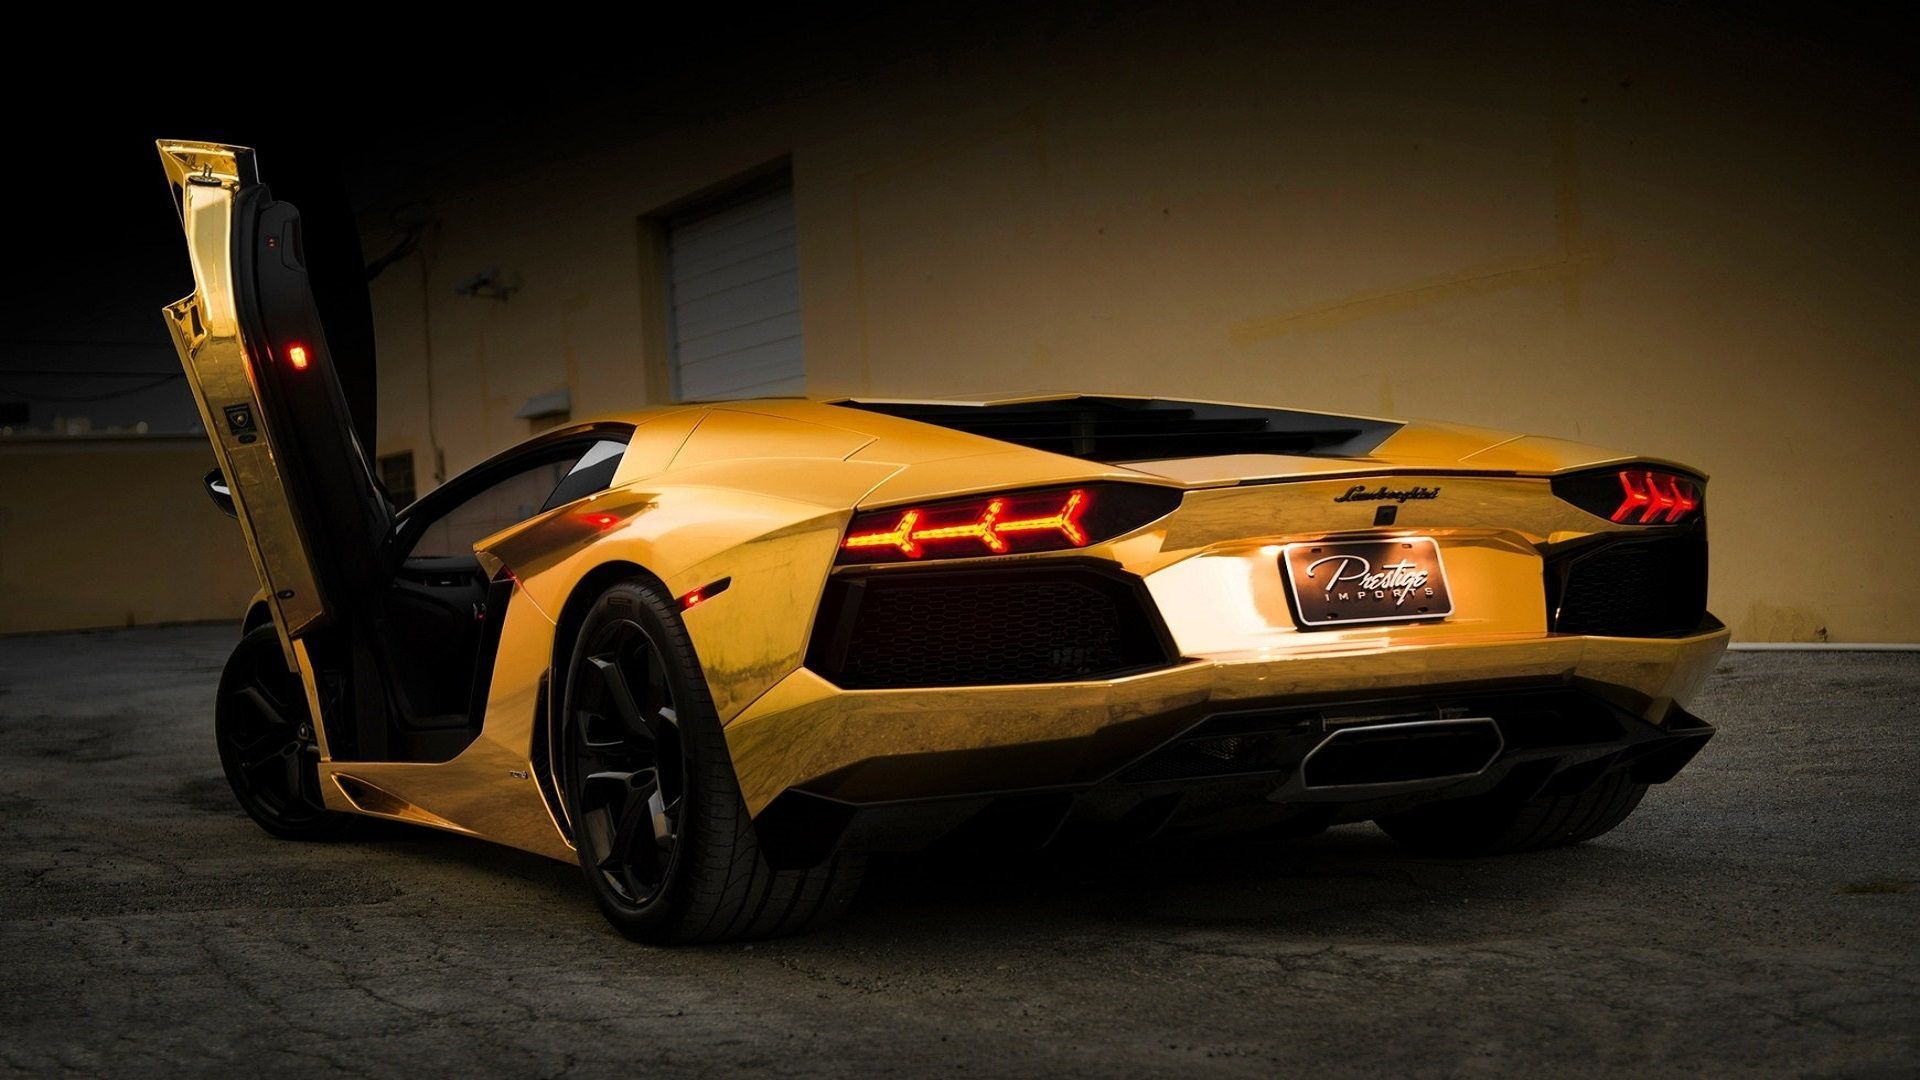 Cool Gold Lamborghini Wallpapers - image #498